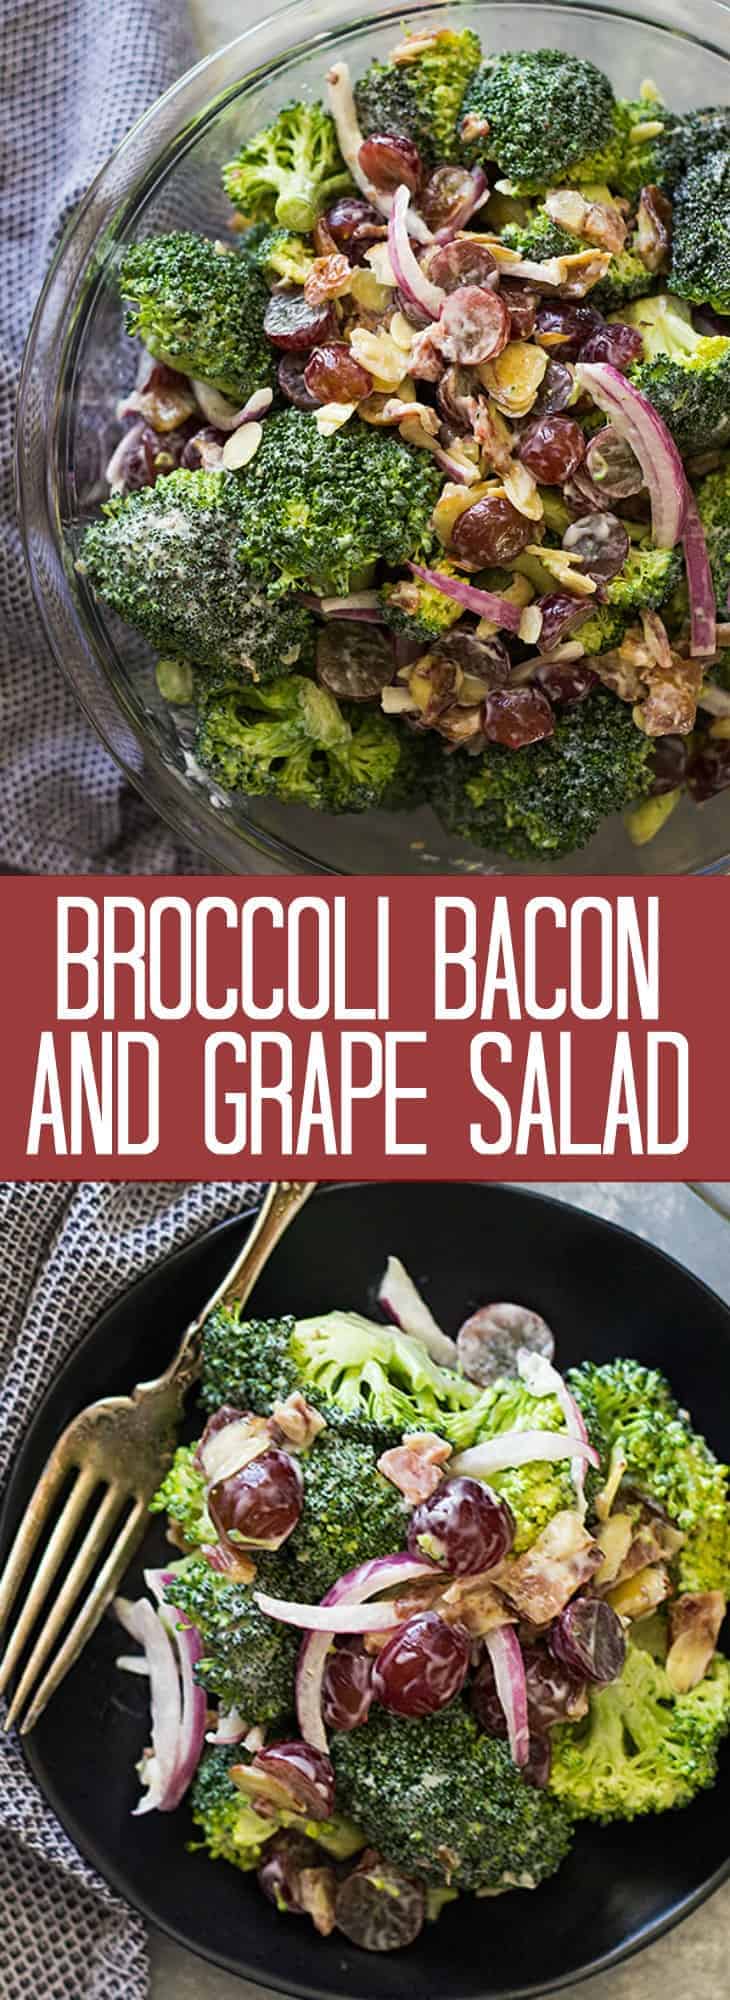 titled image (and shown): broccoli bacon and grape salad